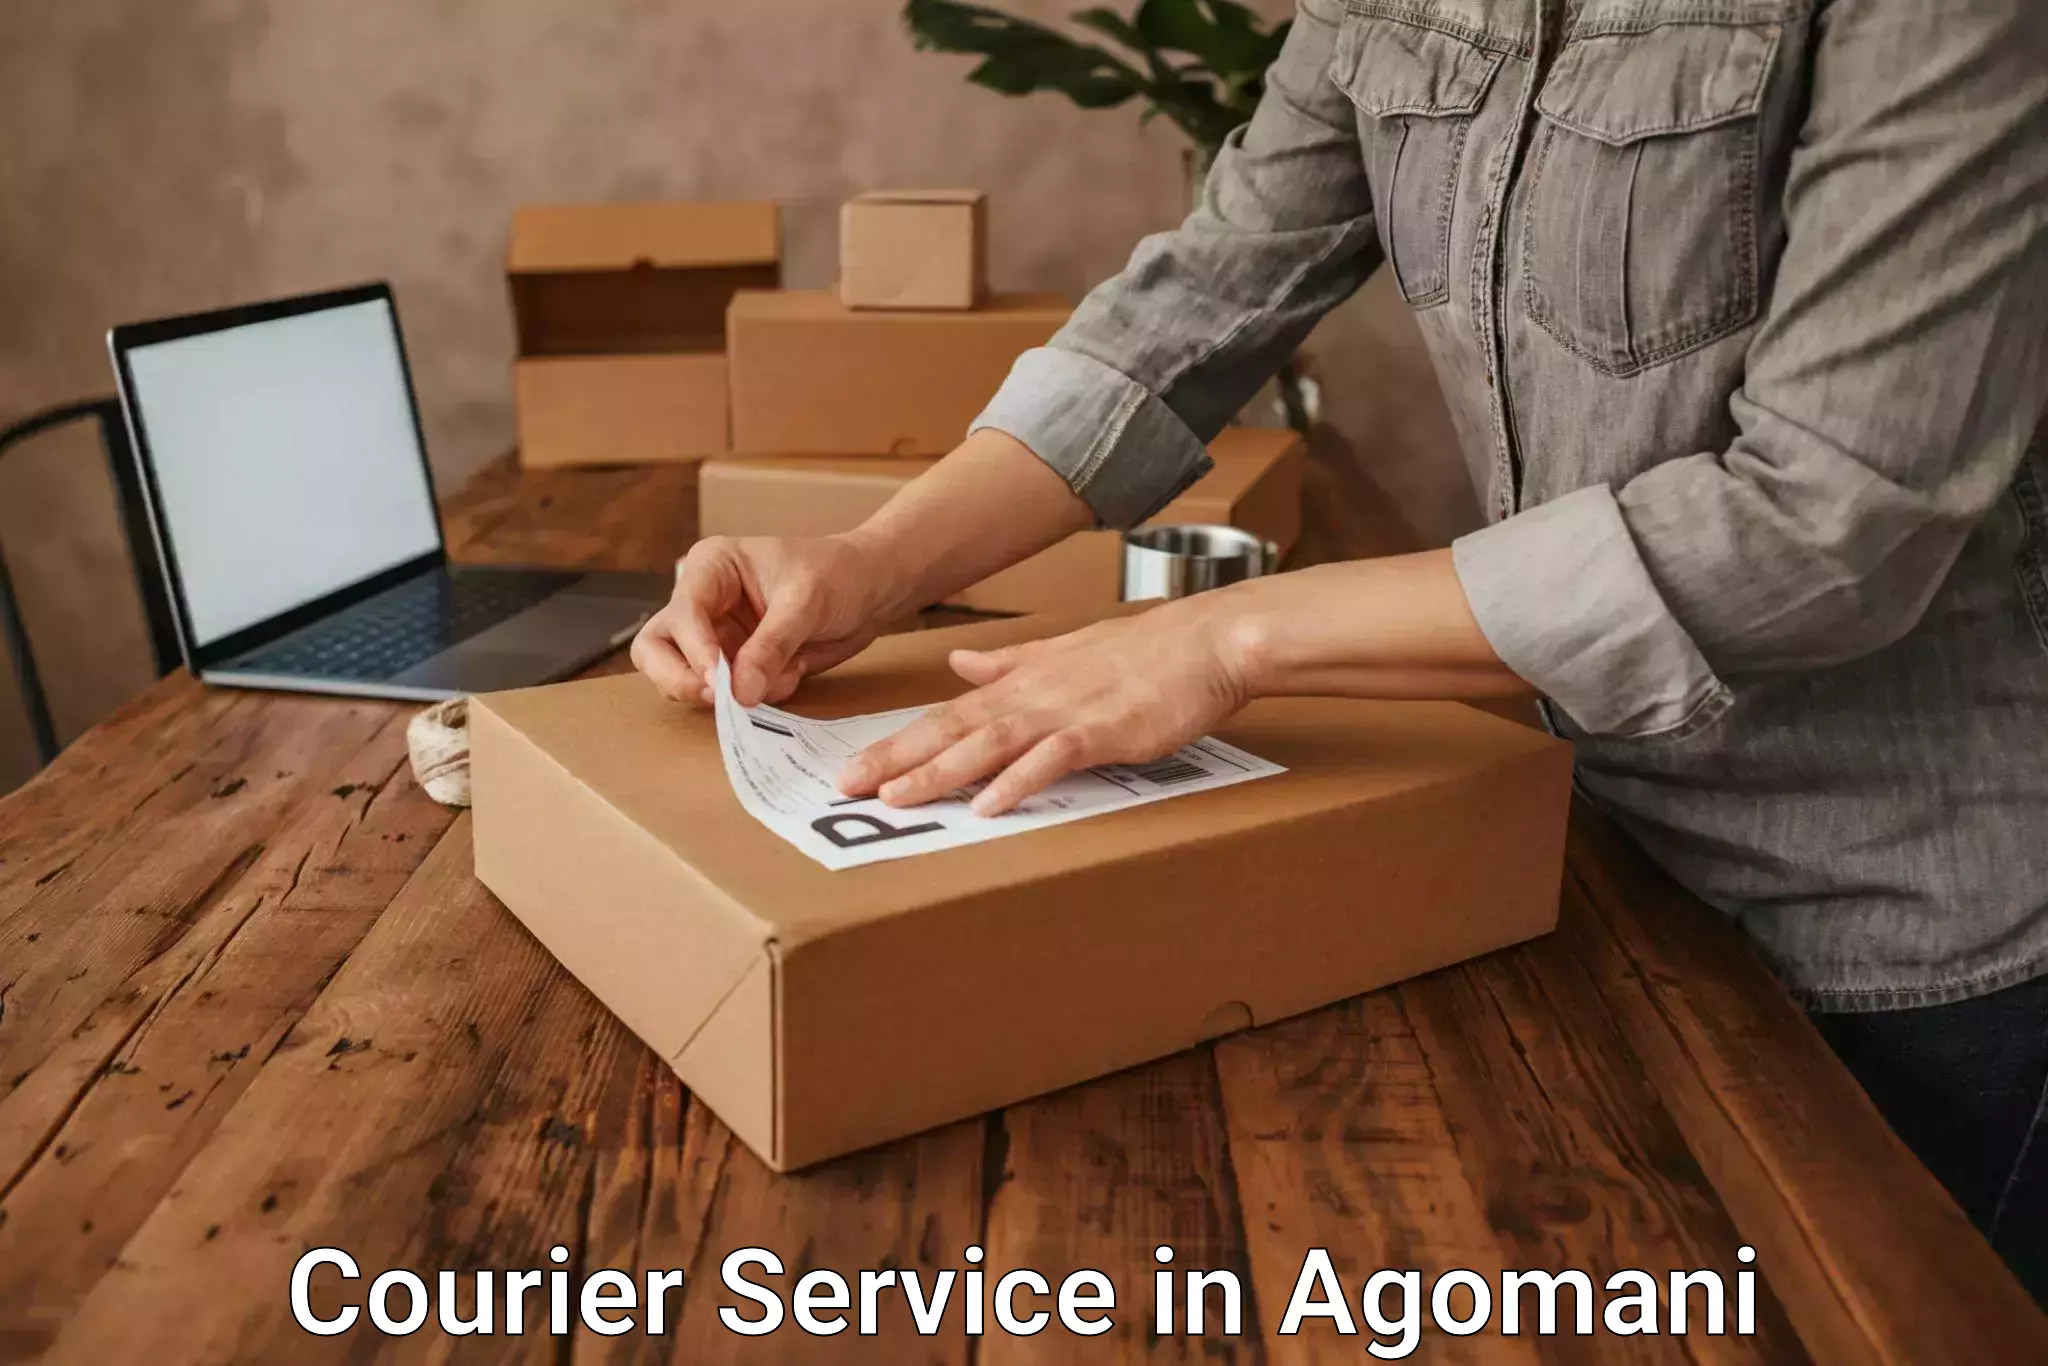 Round-the-clock parcel delivery in Agomani